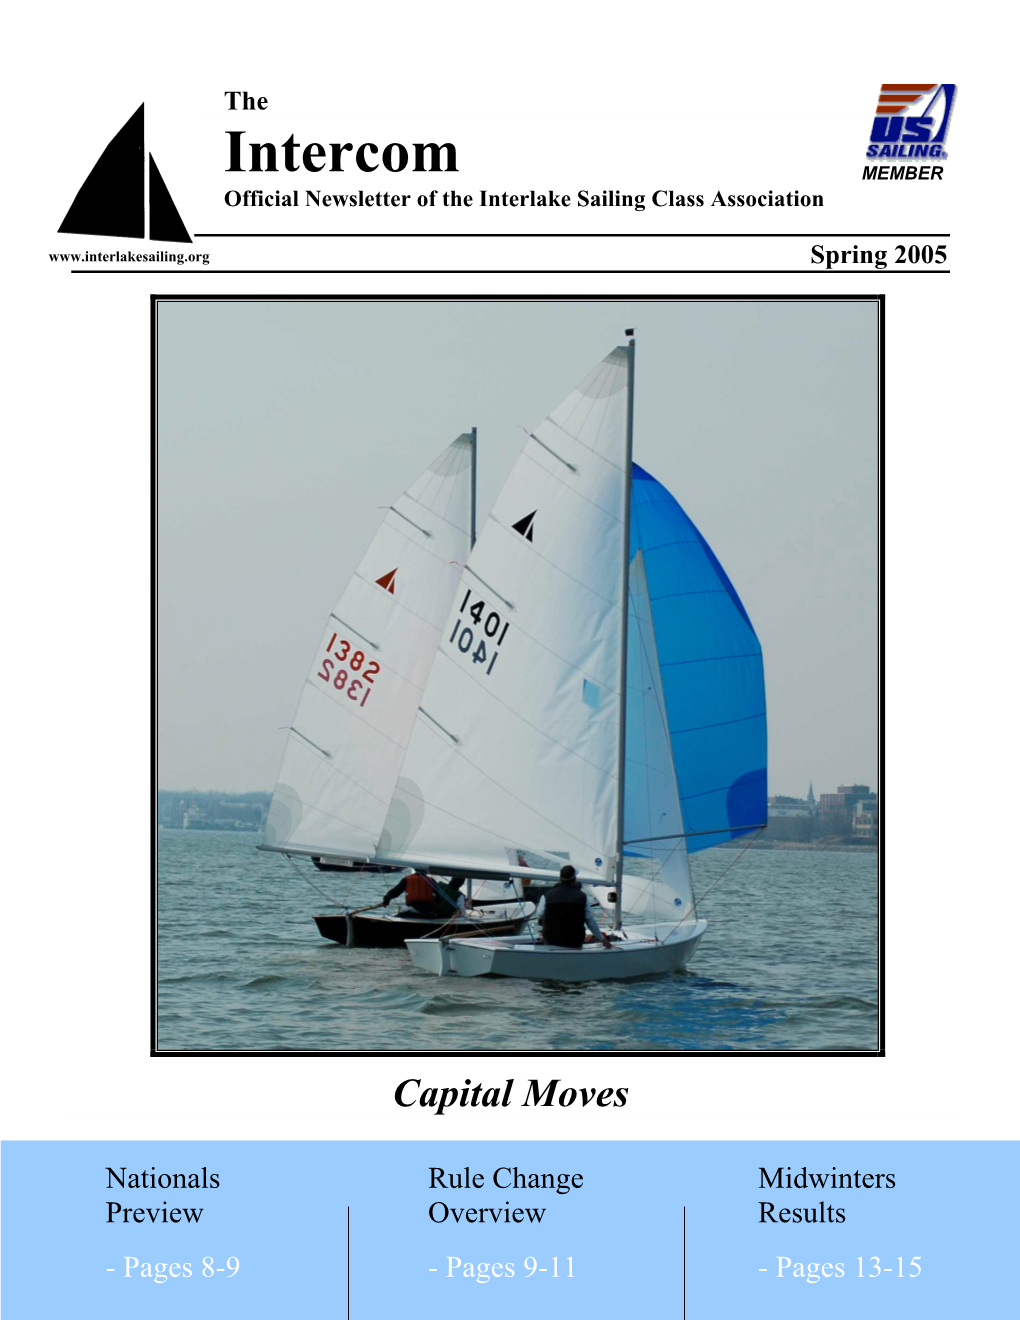 Intercom MEMBER Official Newsletter of the Interlake Sailing Class Association Spring 2005